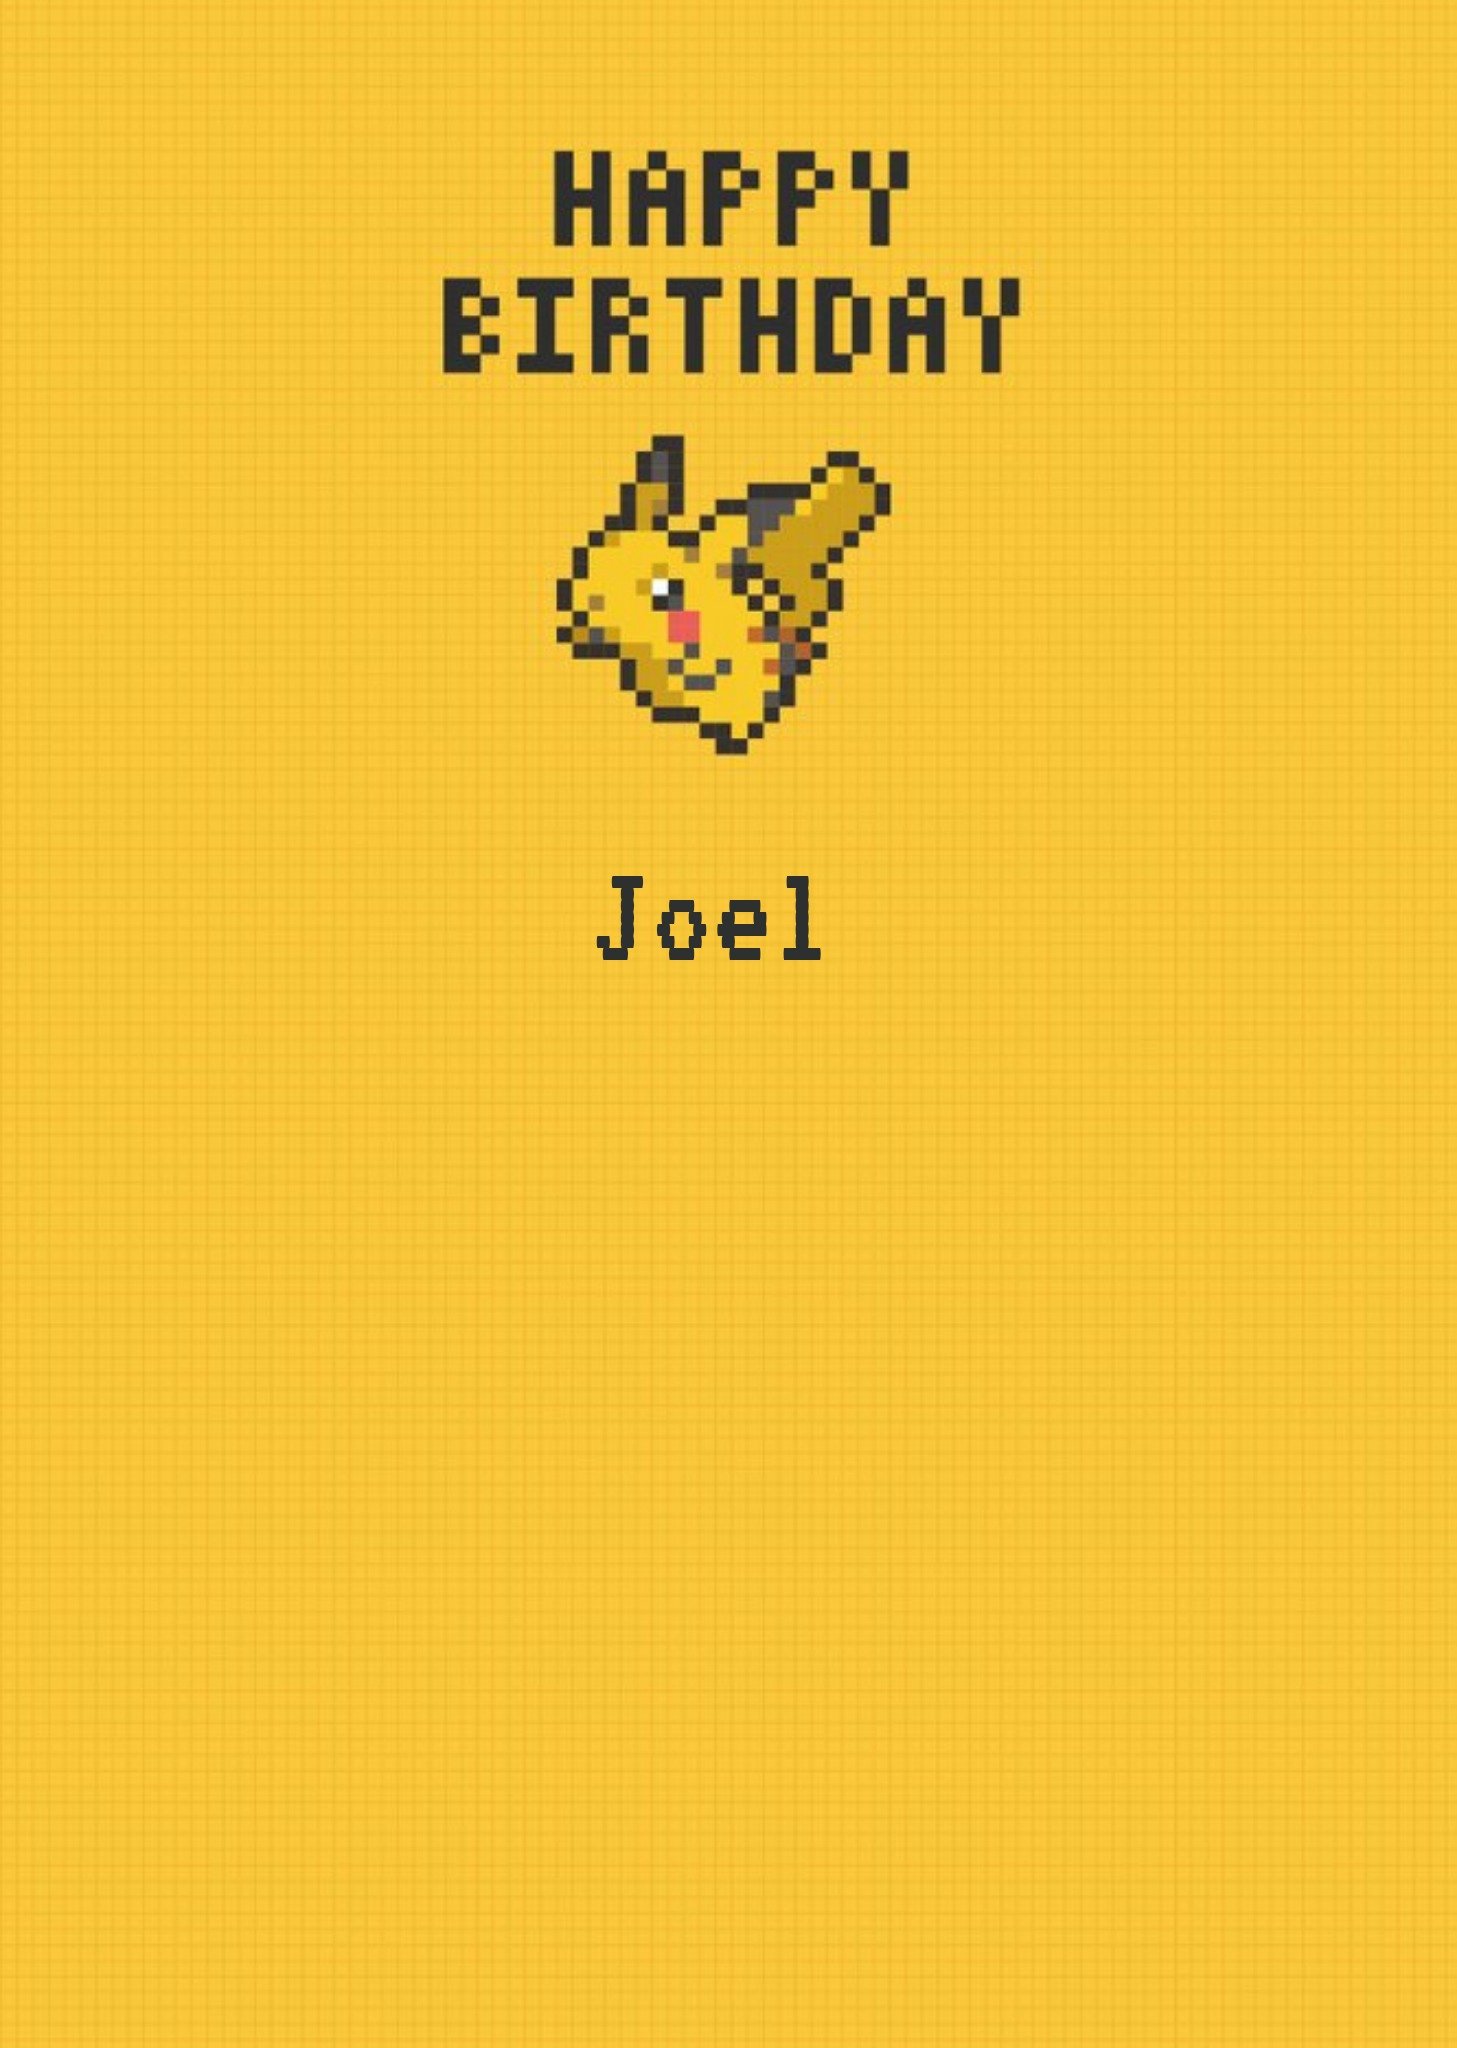 Danilo Pokemon Pikachu Pixalated Happy Birthday Card, Large